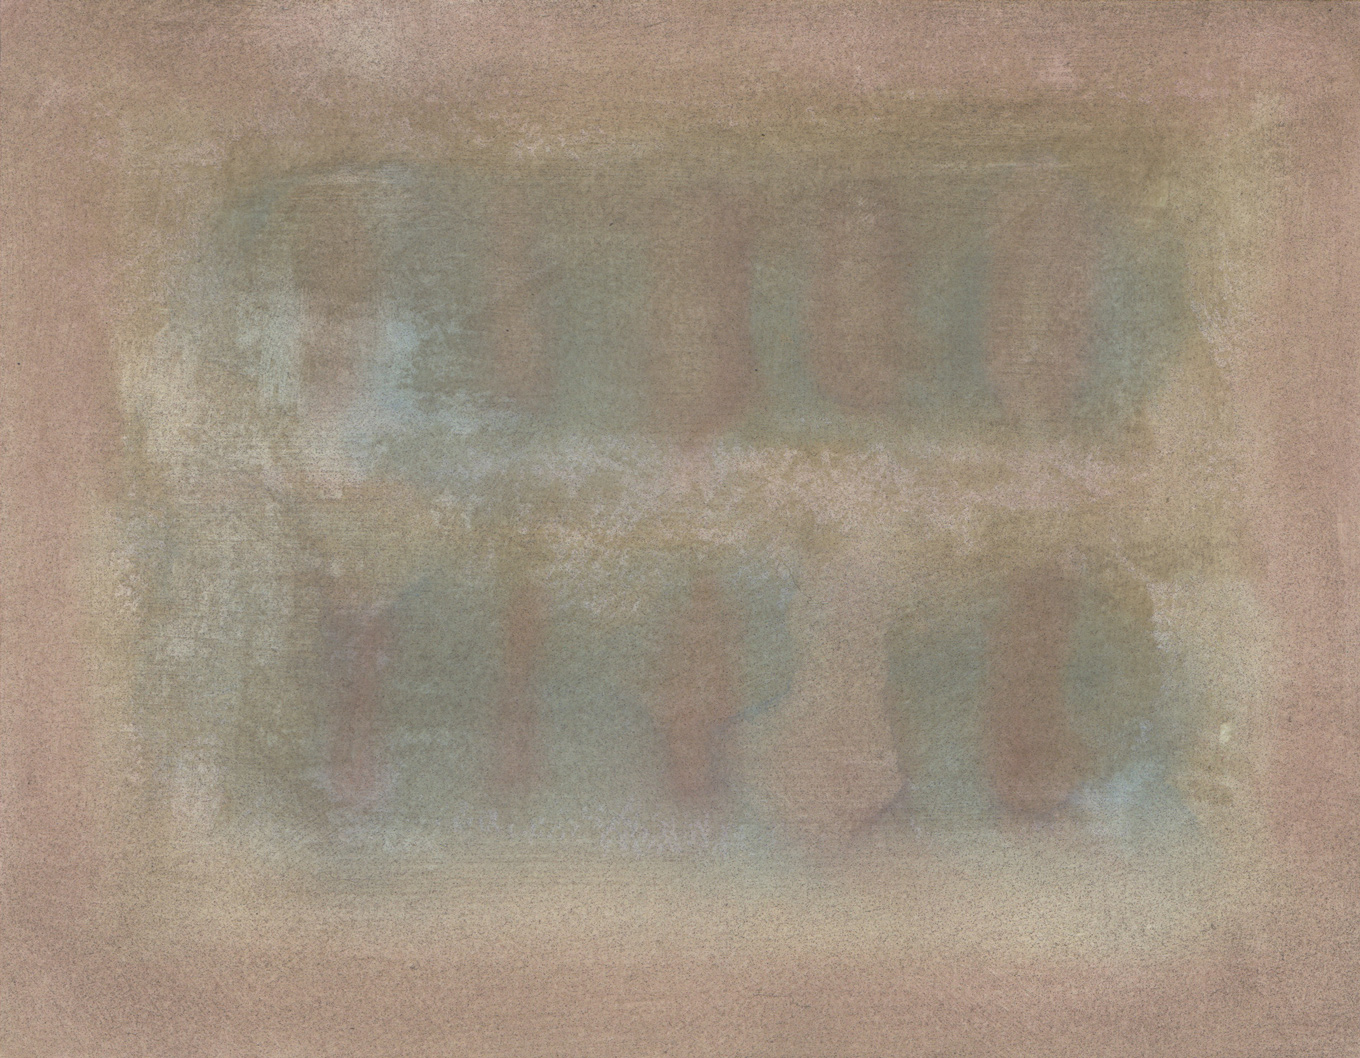 L1408 - Nicholas Herbert, British Artist, abstract painting, Residual Trace - Necropolis, 2022